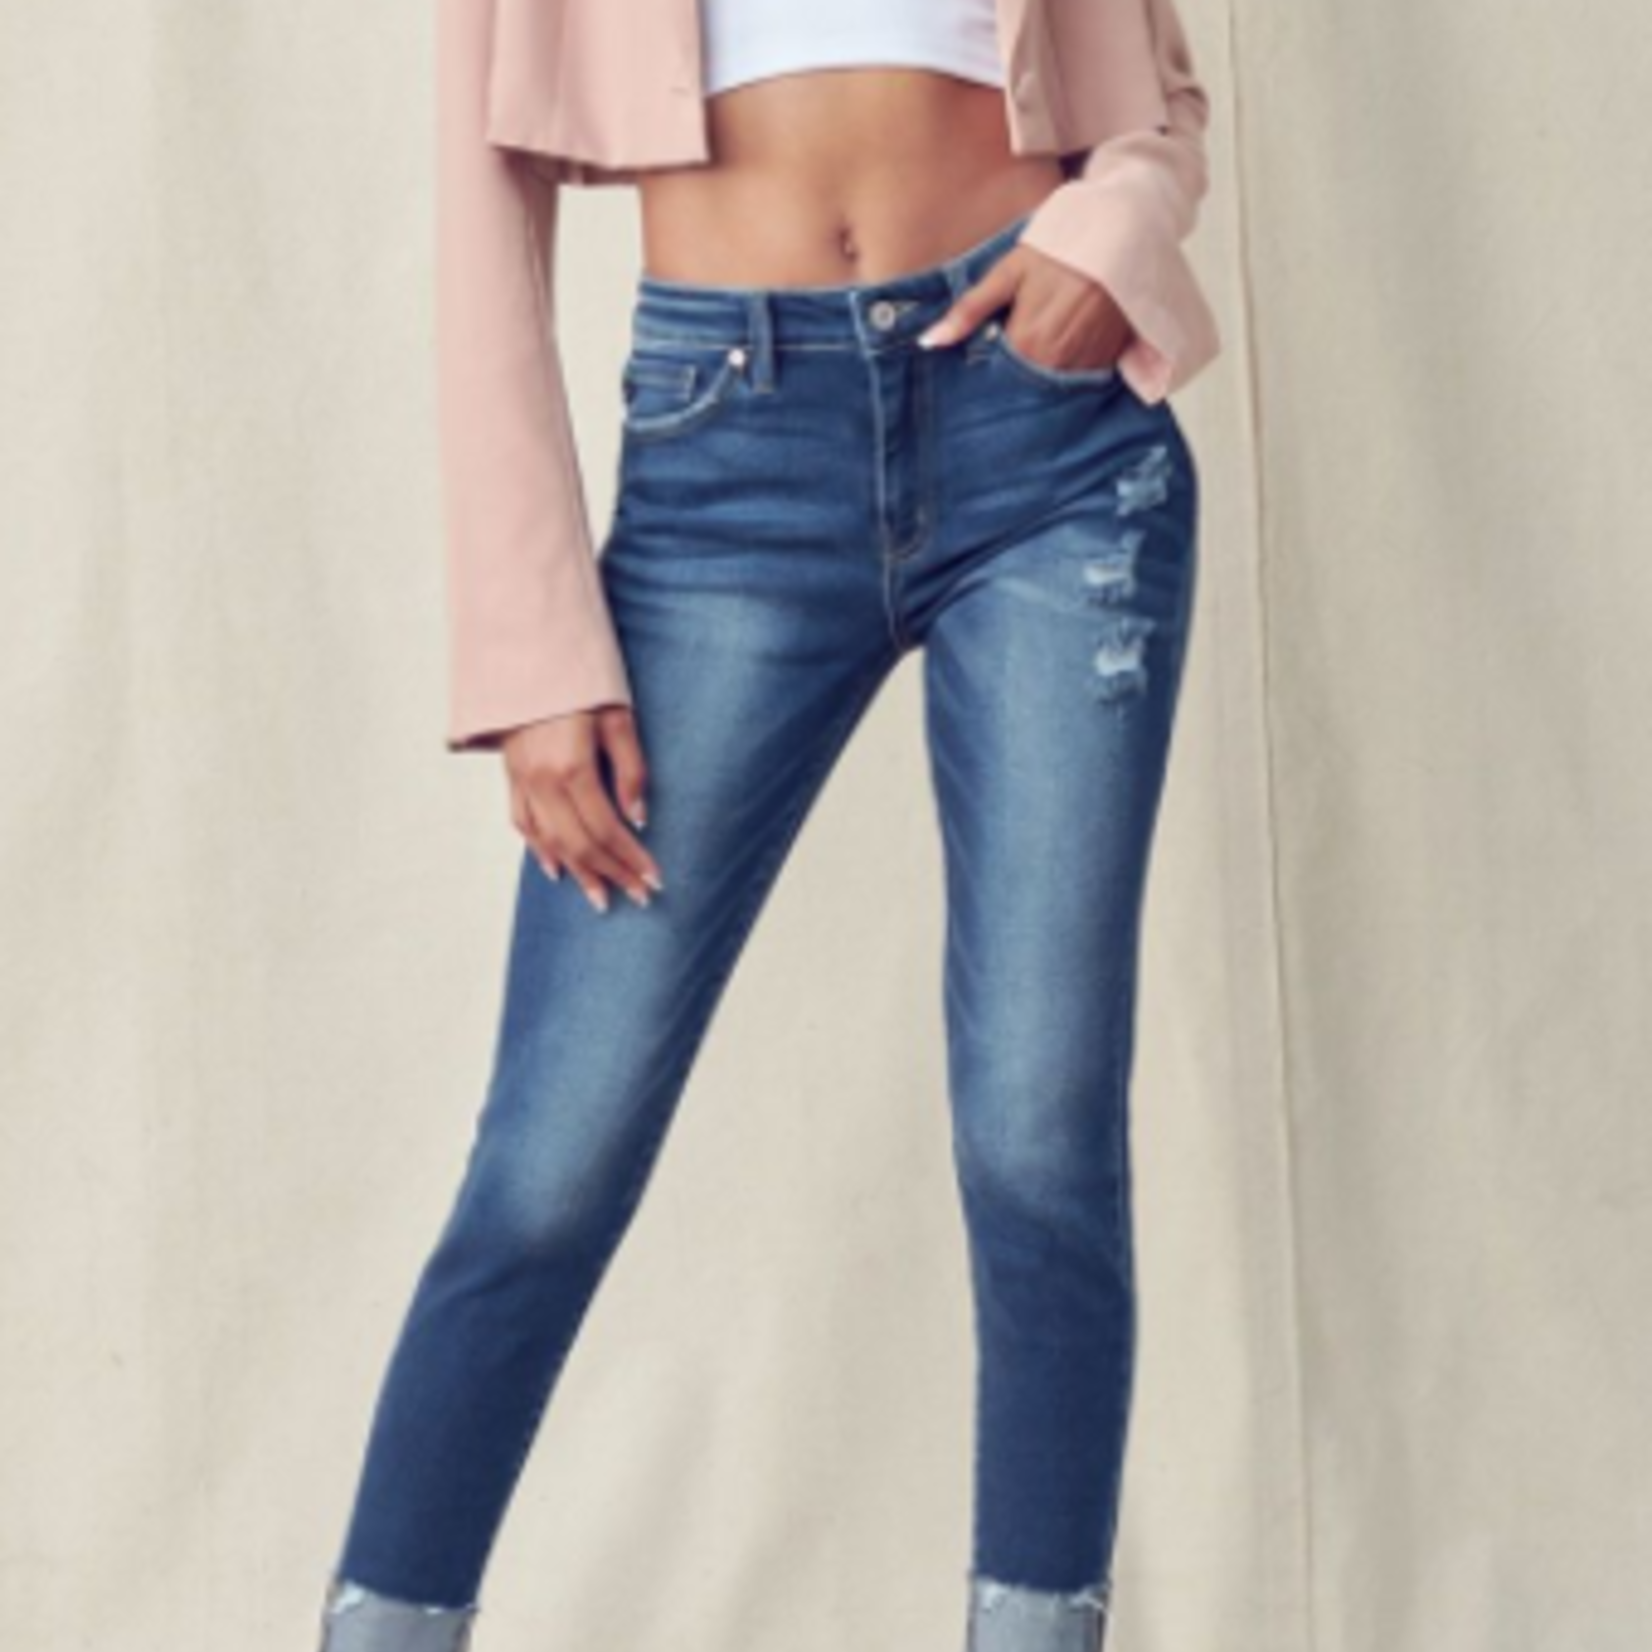 Cuffed Butt Lifting Skinny Jeans | Shop Weekend Wear at Papaya Clothing